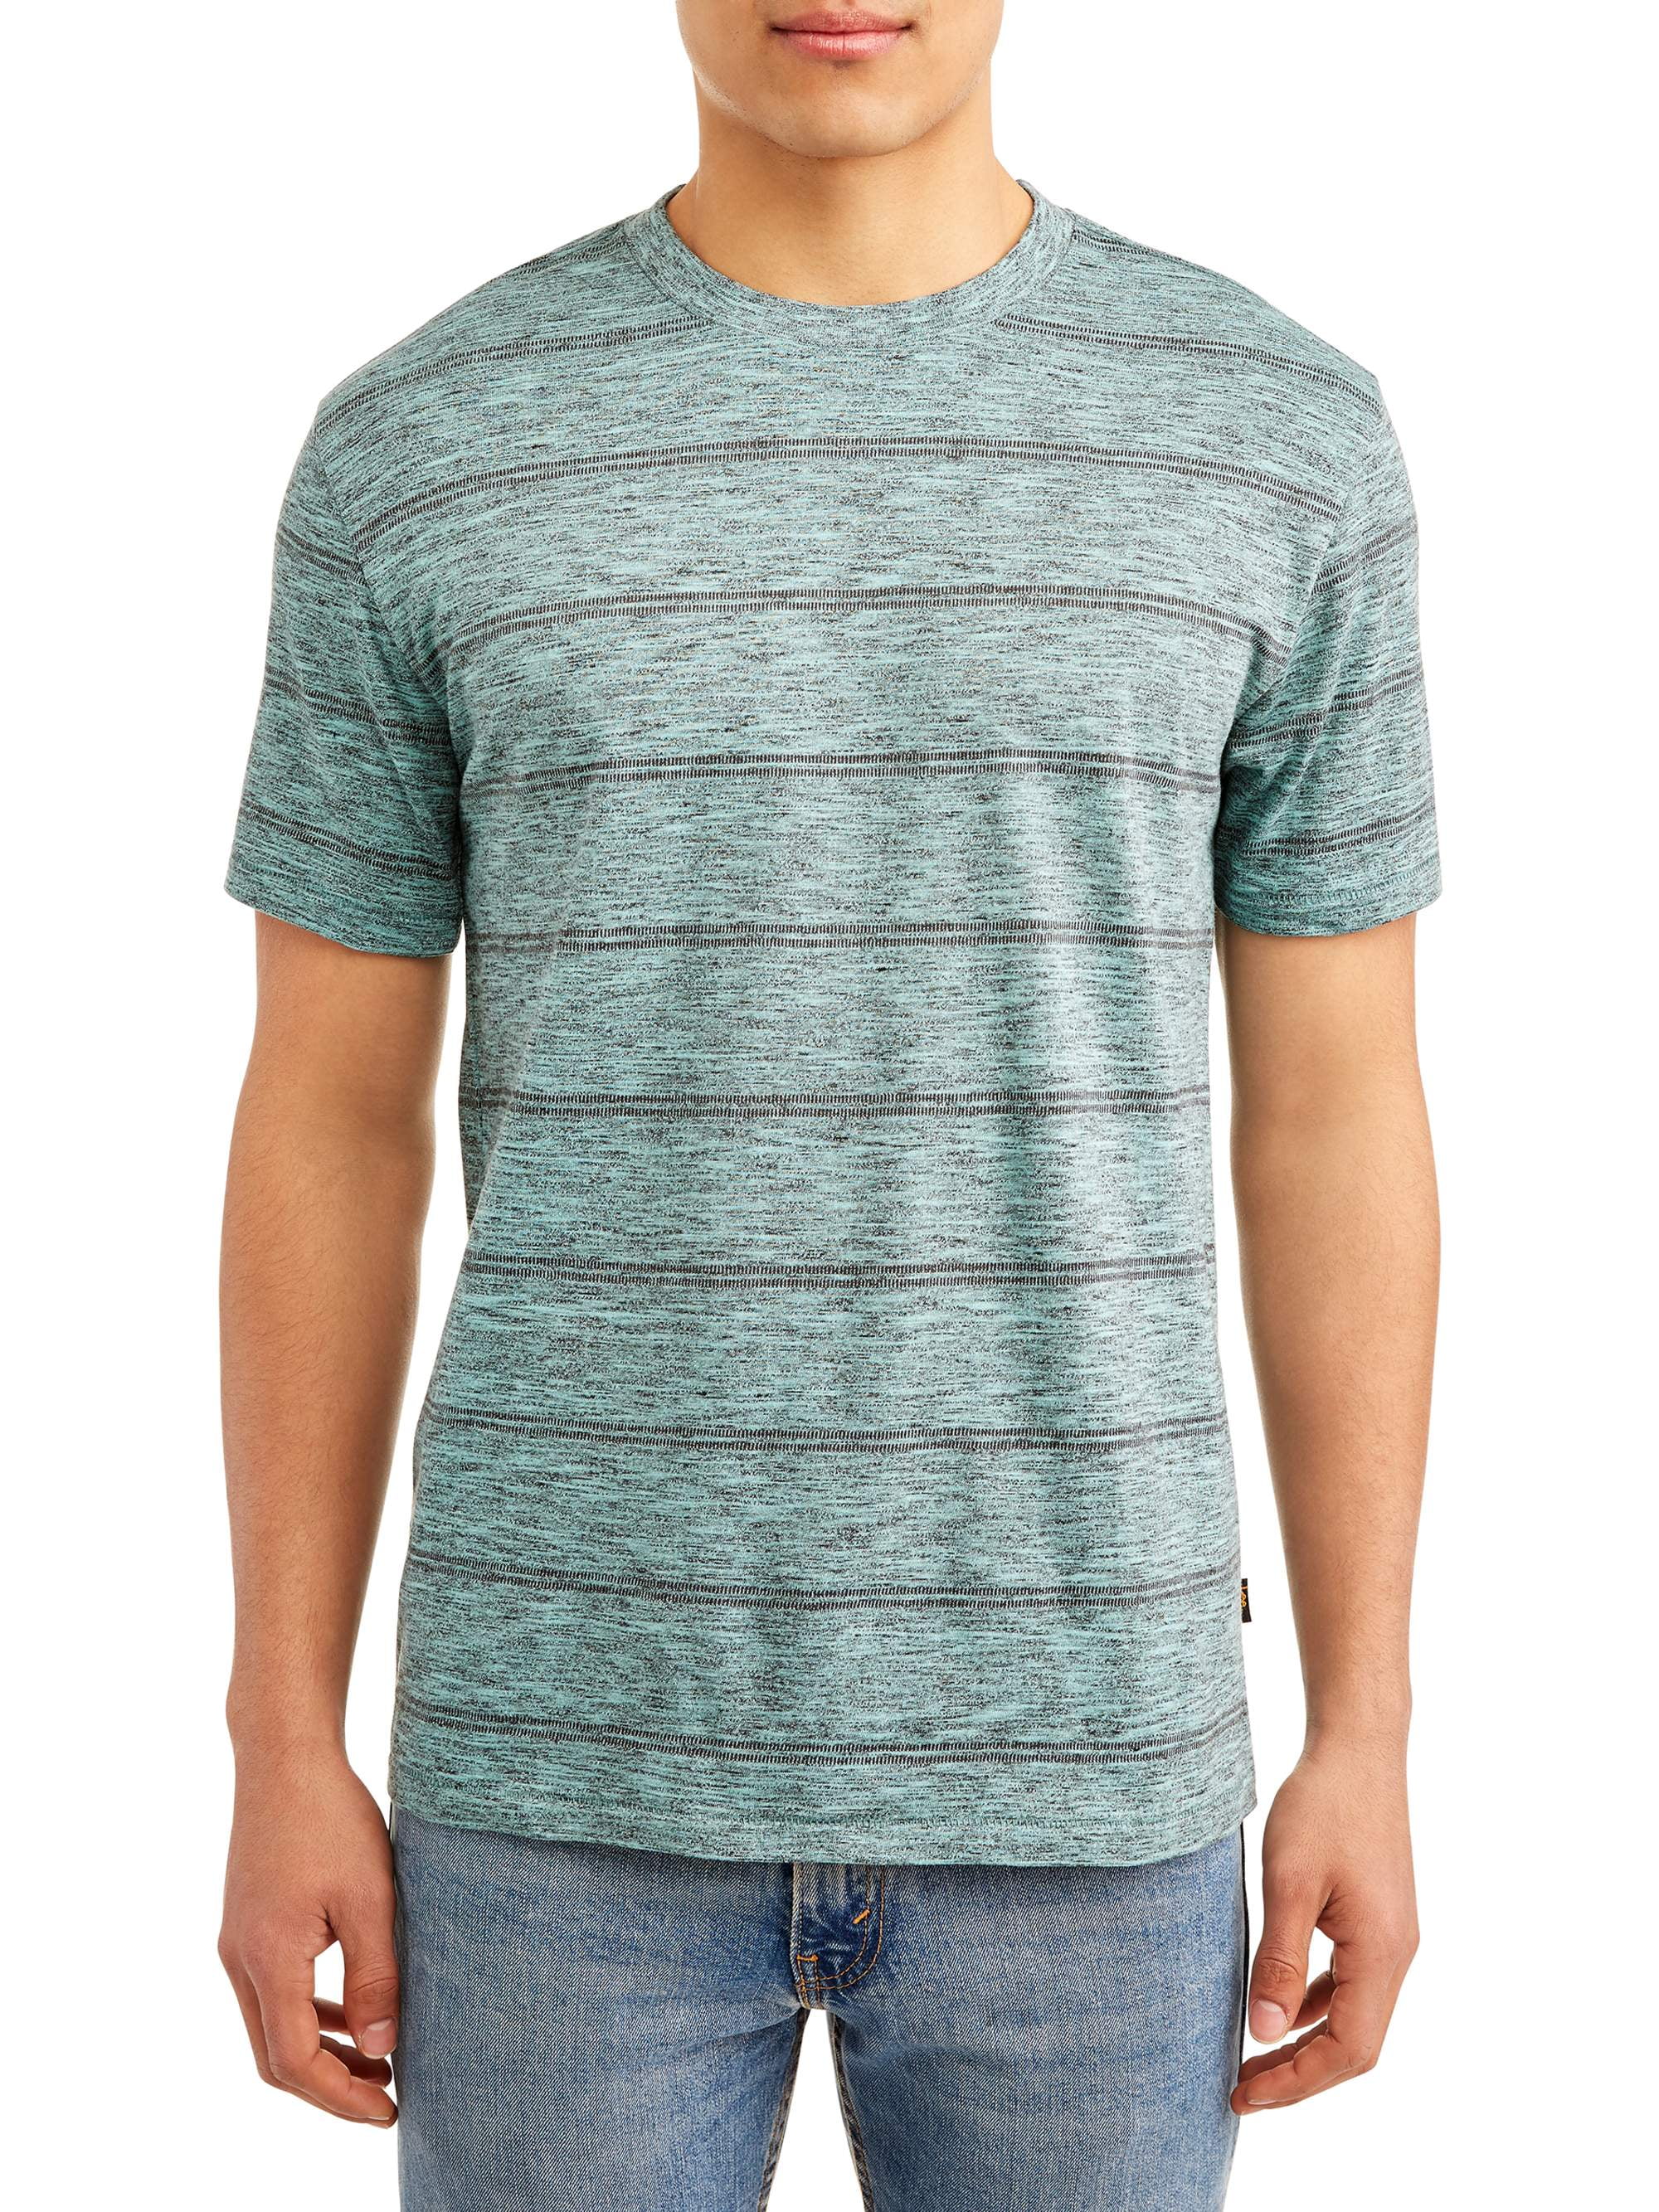 Lee - Lee Men's Short Sleeve Striped Crew Neck T-Shirt - Walmart.com ...